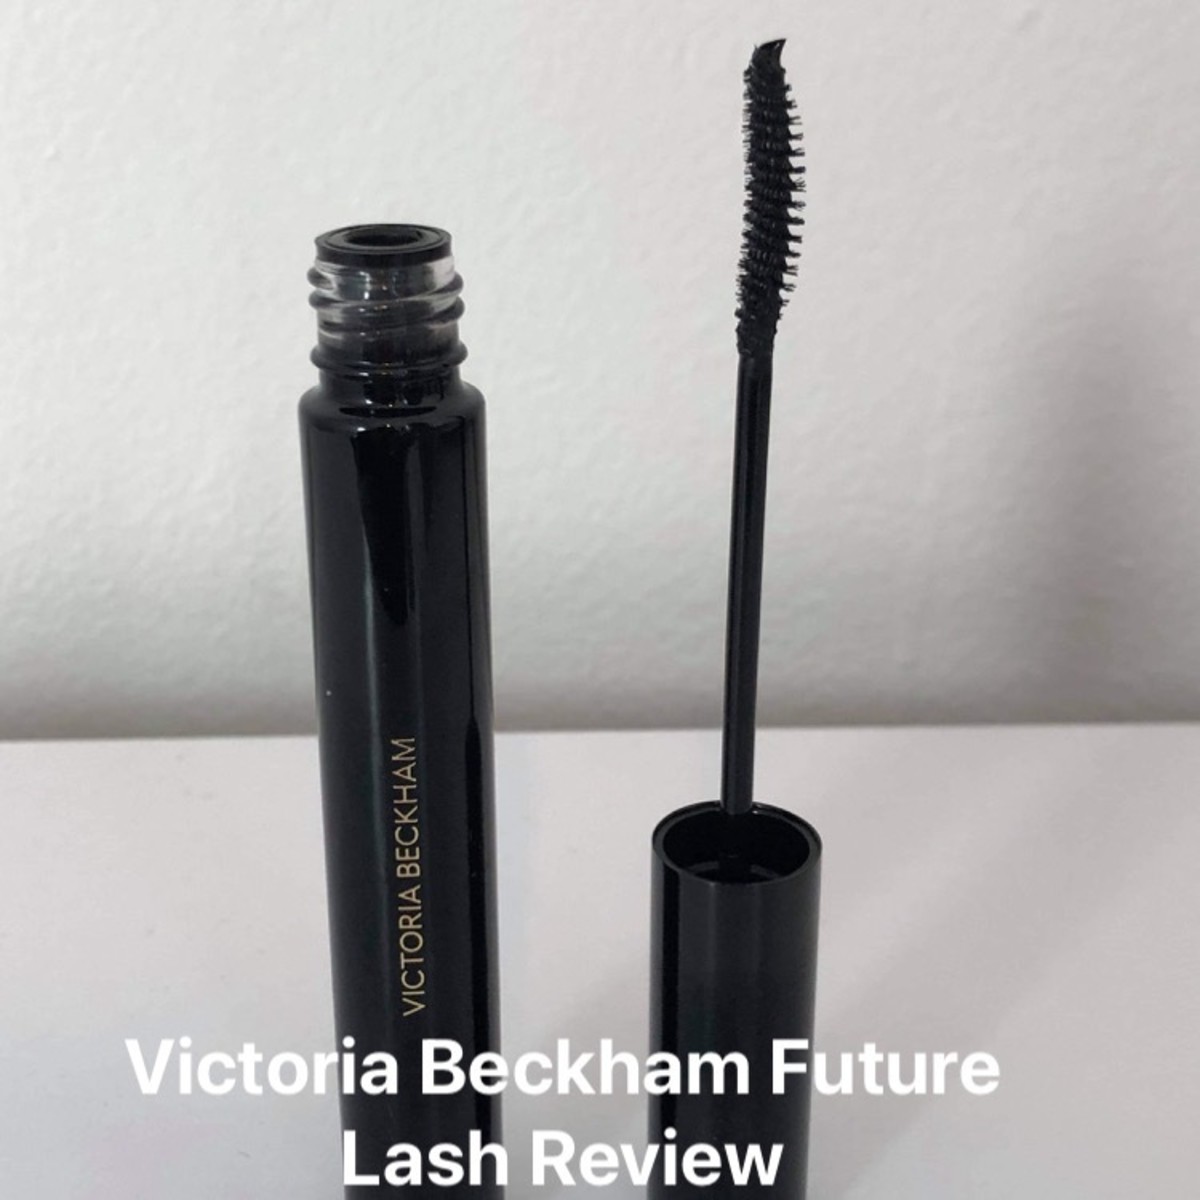 Victoria Beckham Future Lash mascara bottle with applicator.